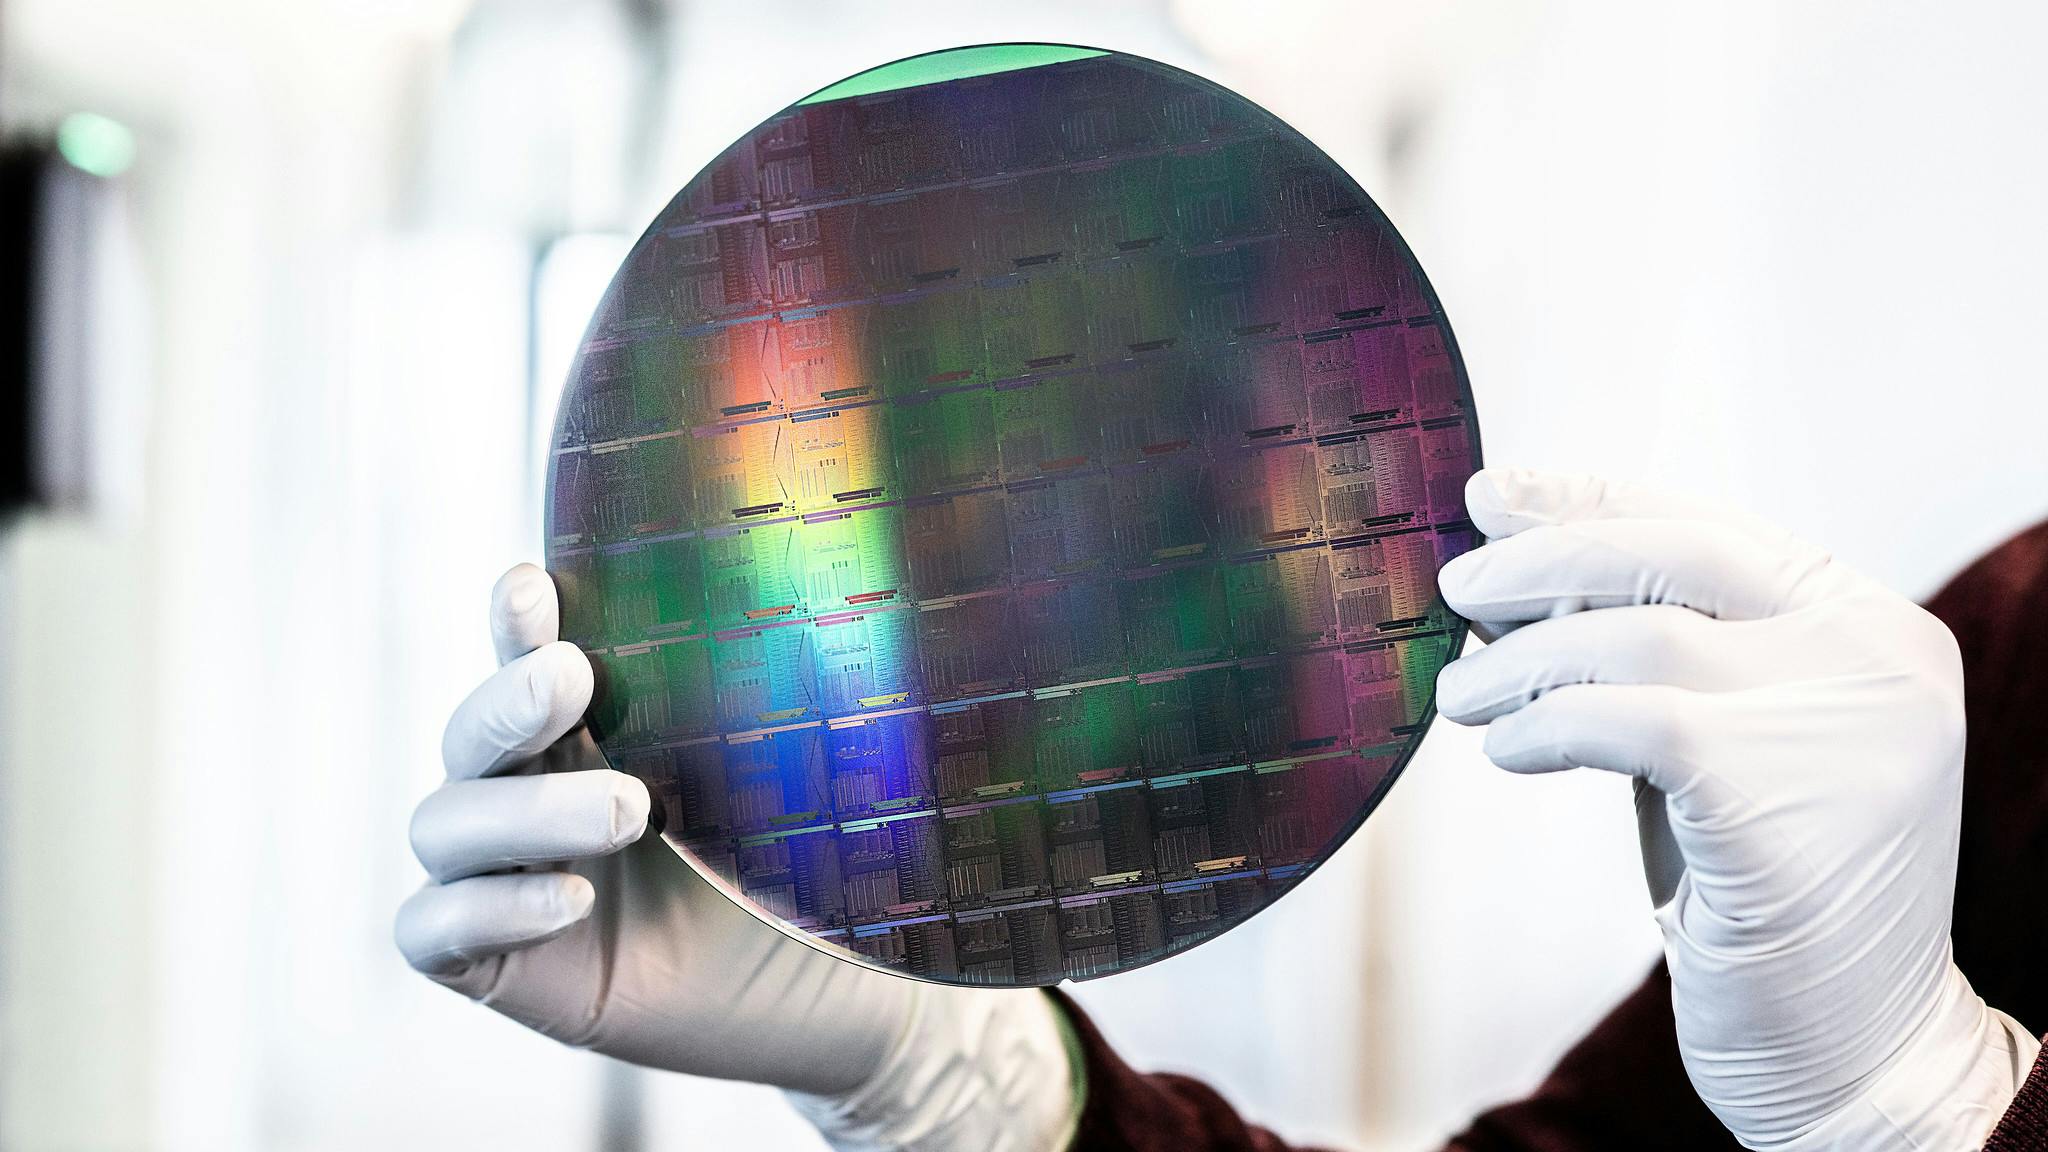 Xanadu and imec partner to develop photonic chips for fault tolerant quantum computing